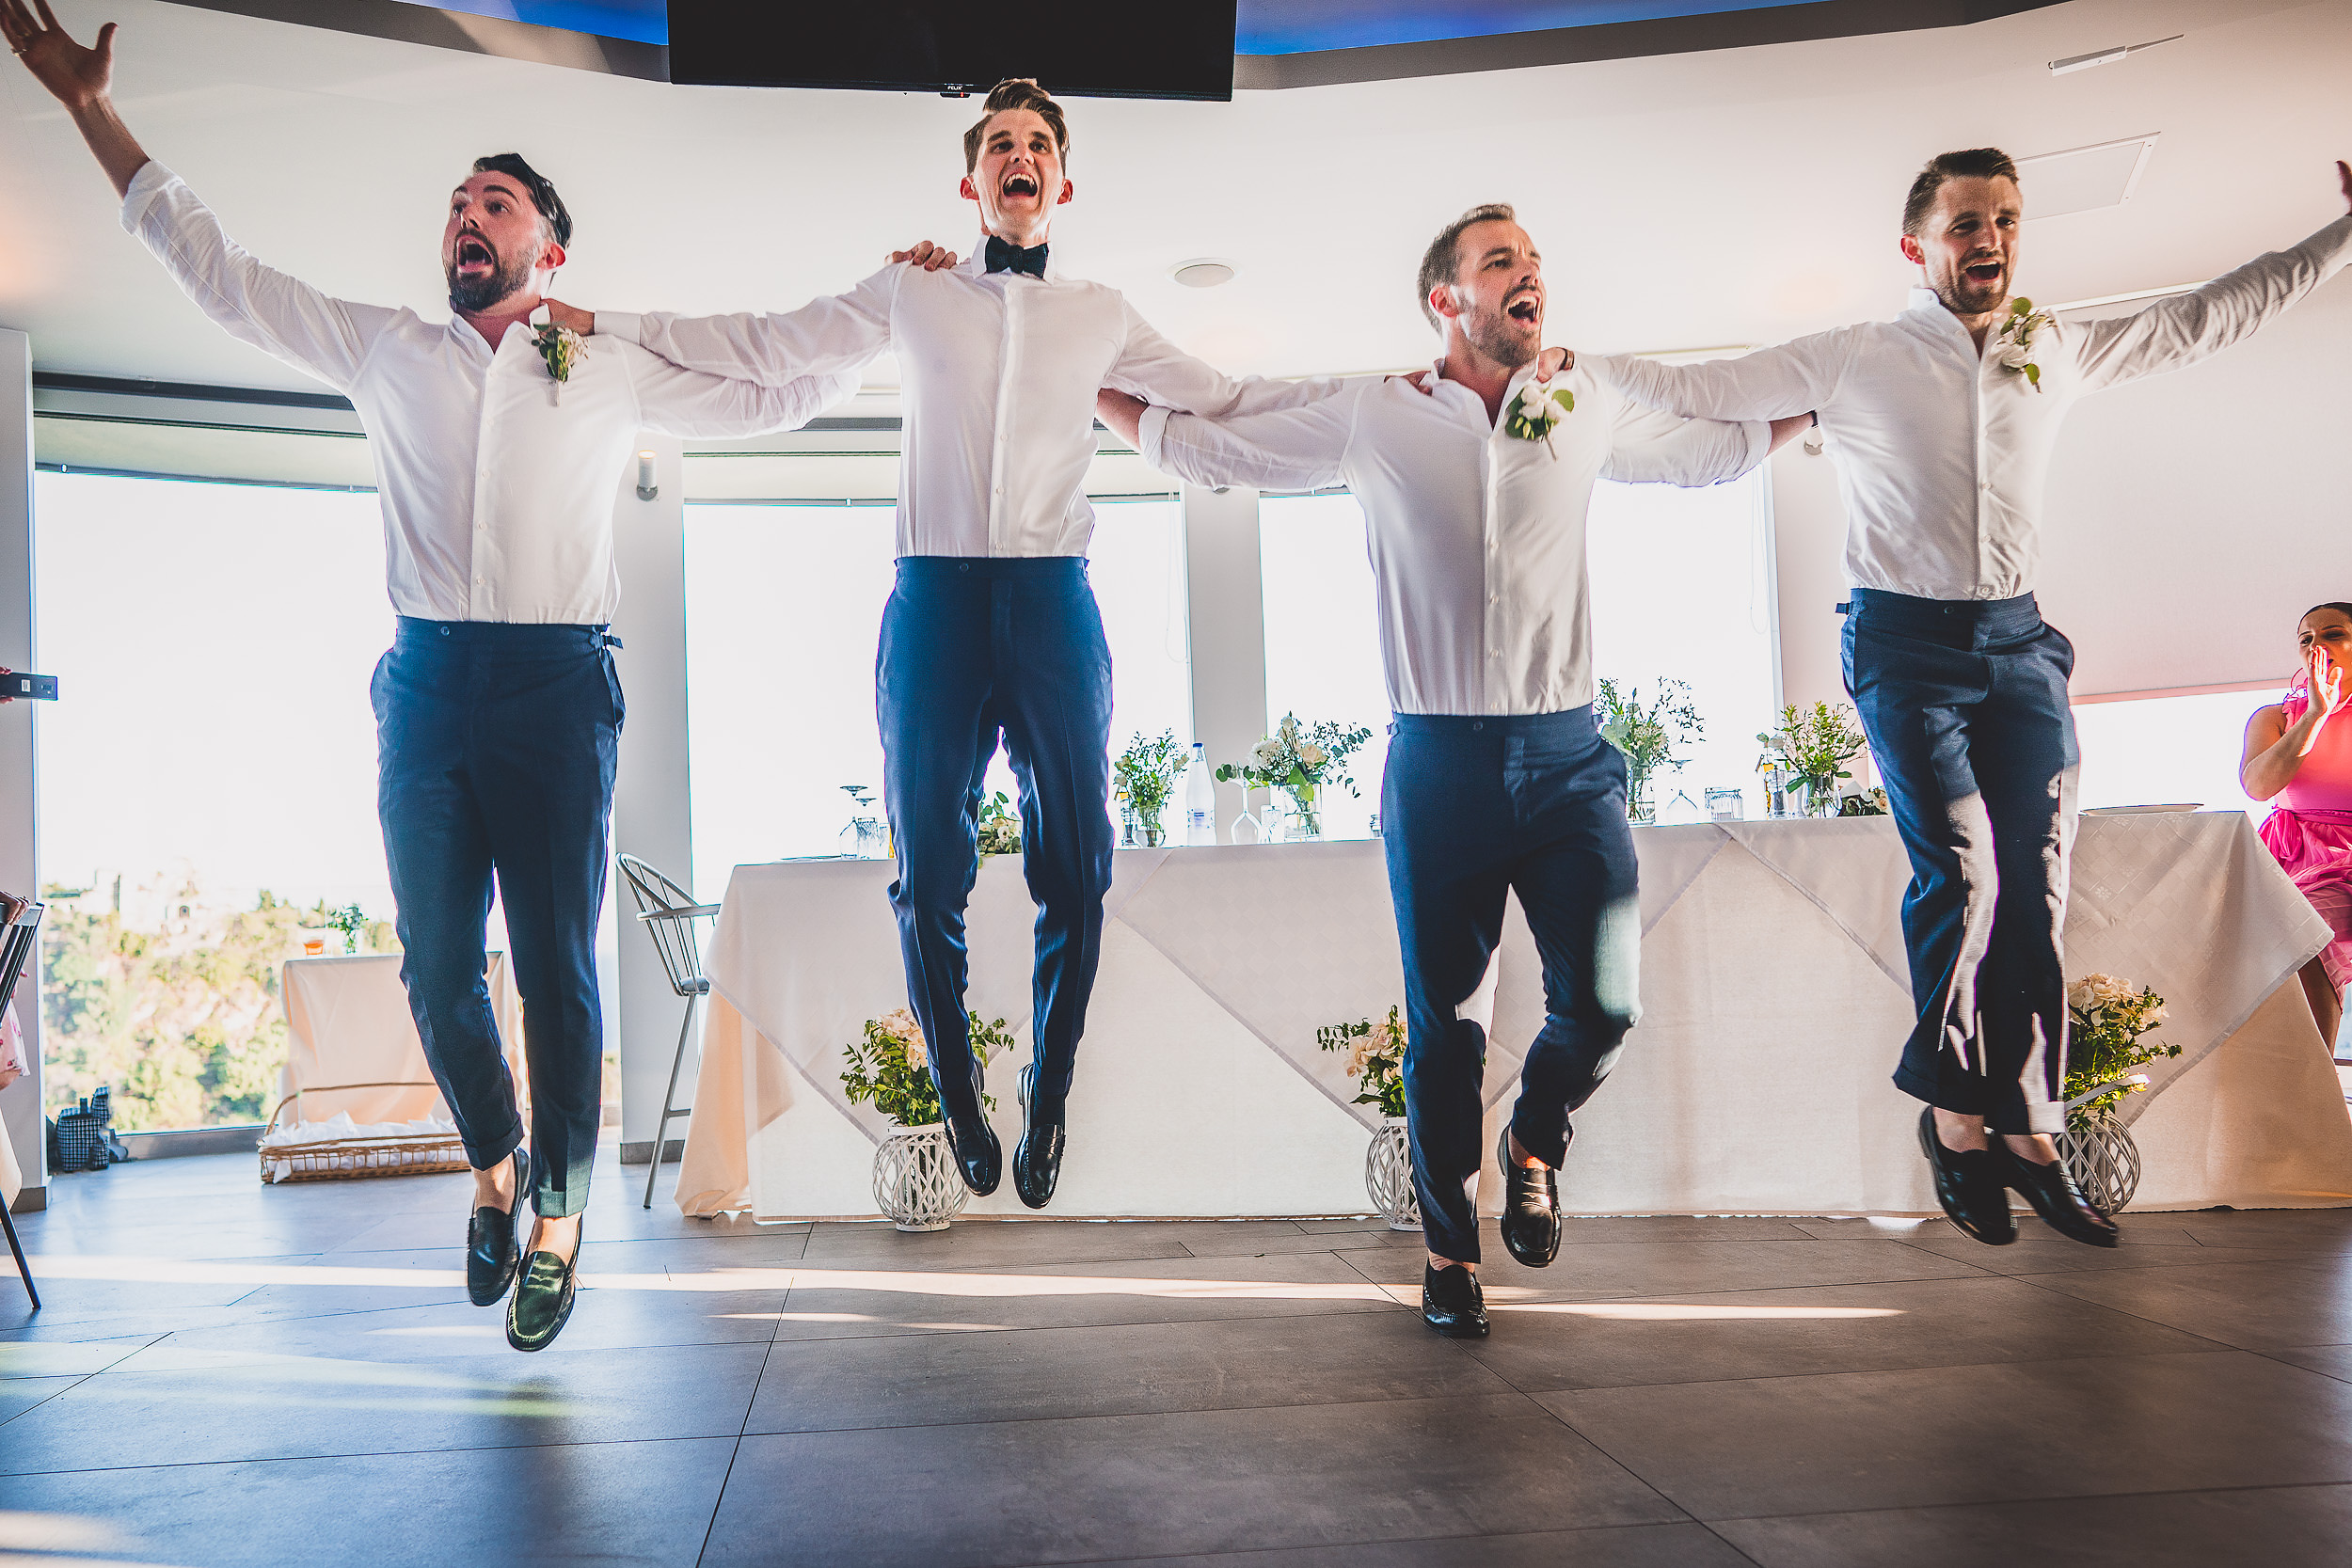 Groomsmen's joyful leap during wedding celebration.